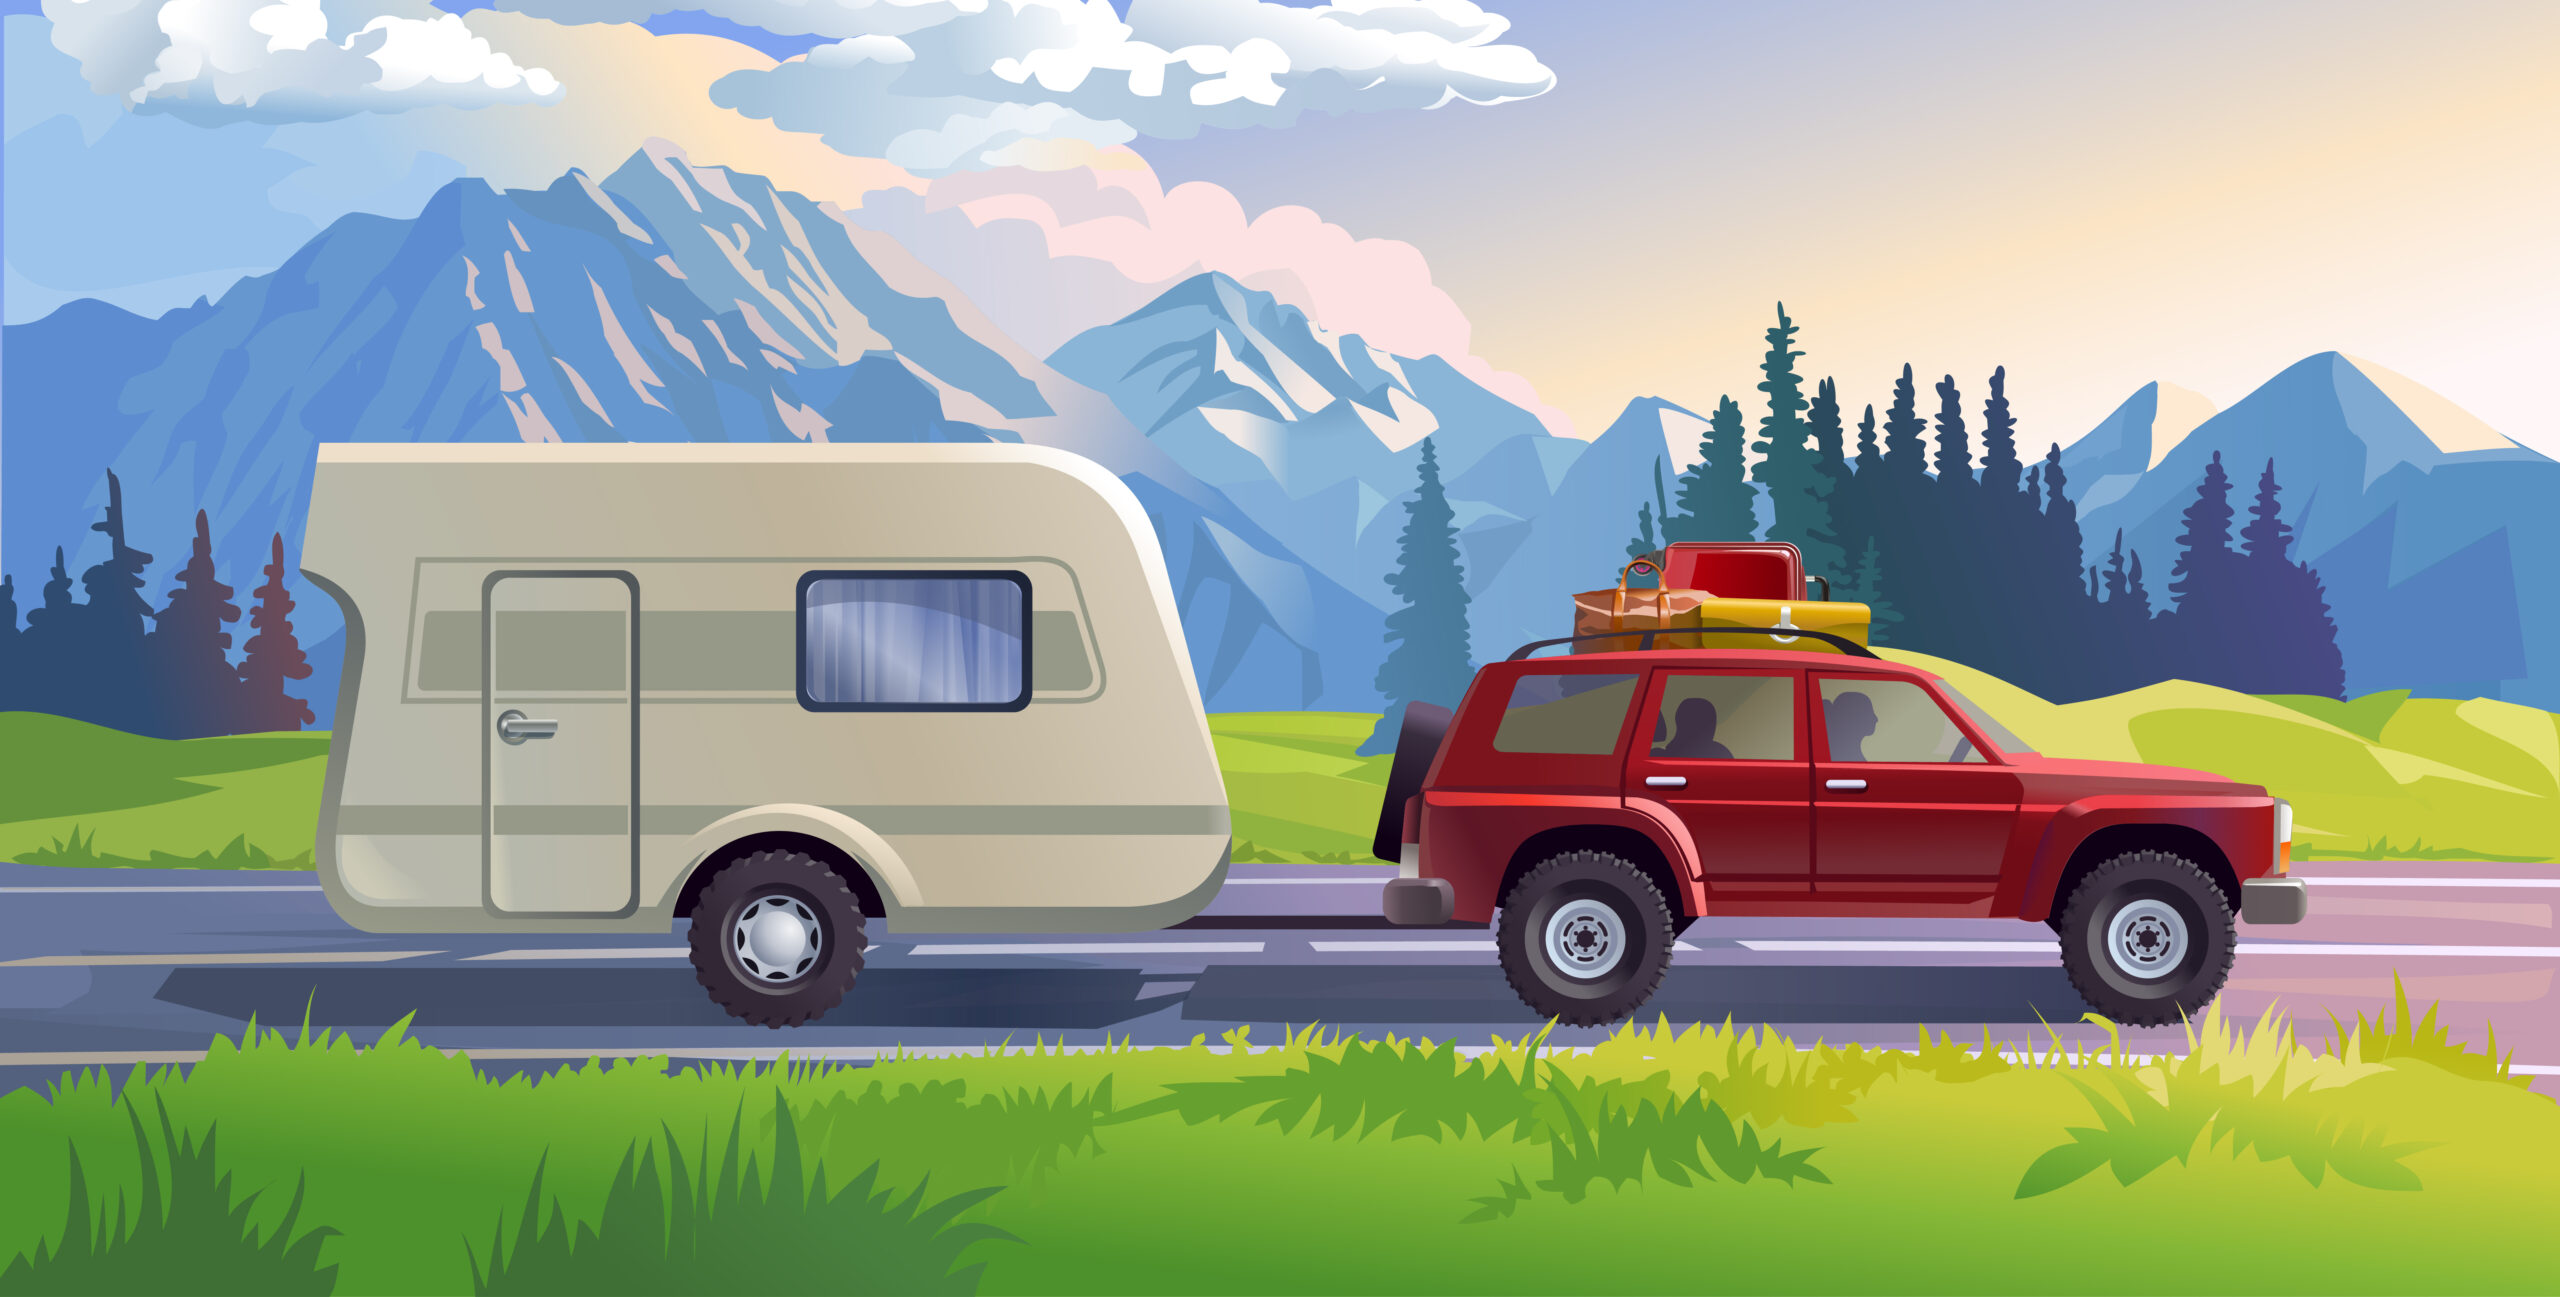 Lightweight travel trailers